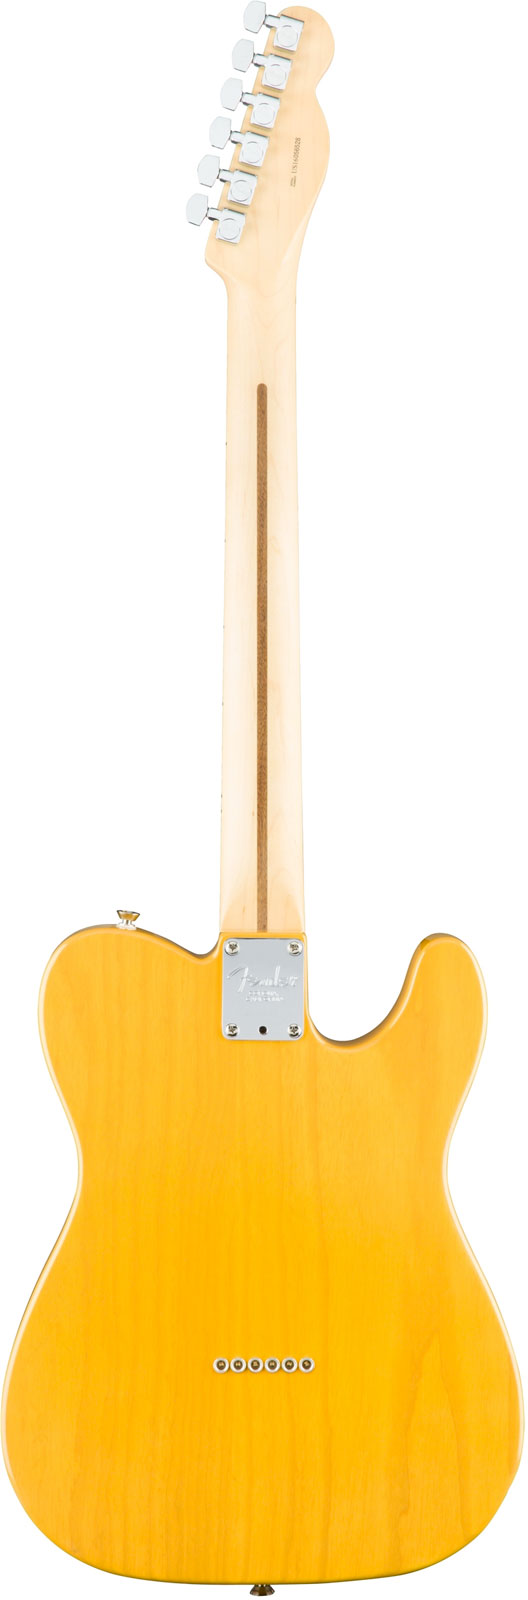 Fender Tele American Professional Lh Usa Gaucher 2s Mn - Butterscotch Blonde - Left-handed electric guitar - Variation 2